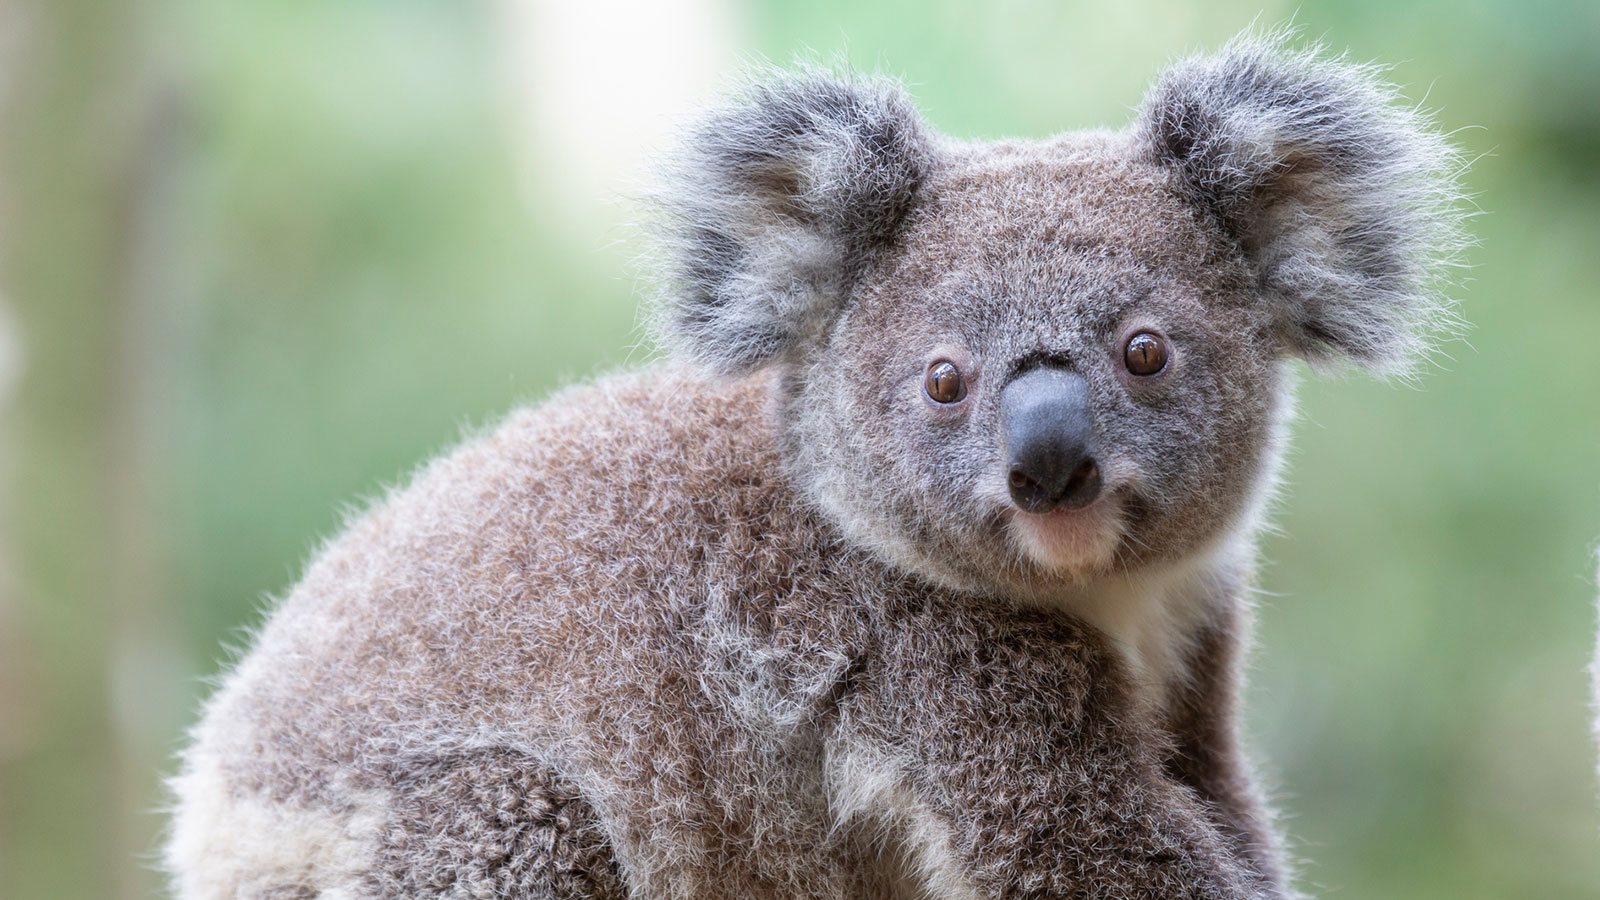 koala threats and predators